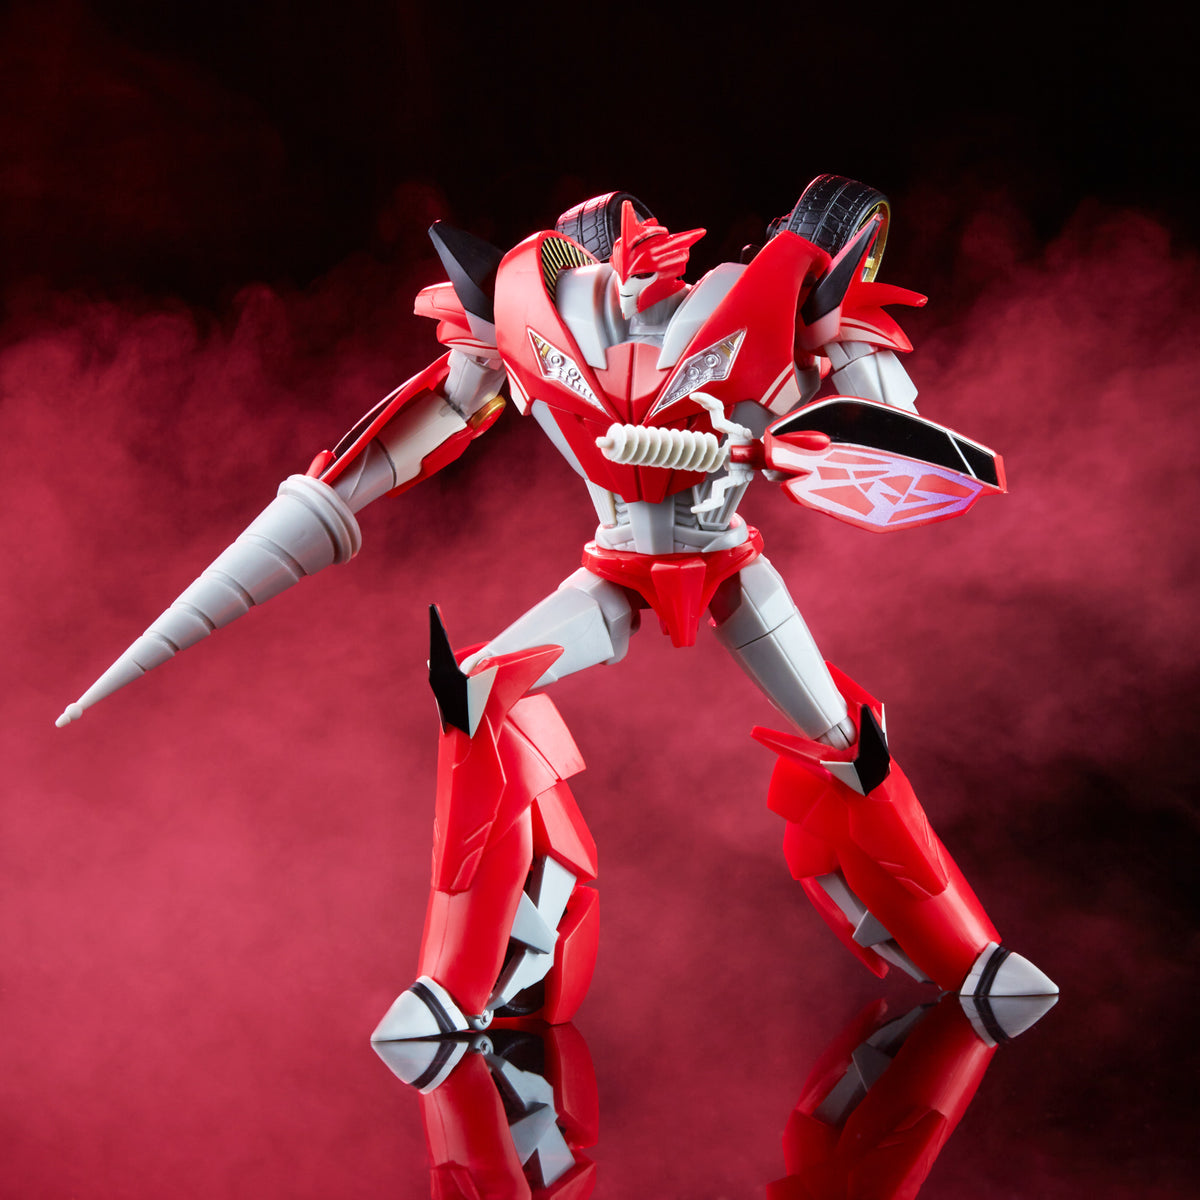 Transformers R.E.D. [Robot Enhanced Design] Optimus Prime Action Figure